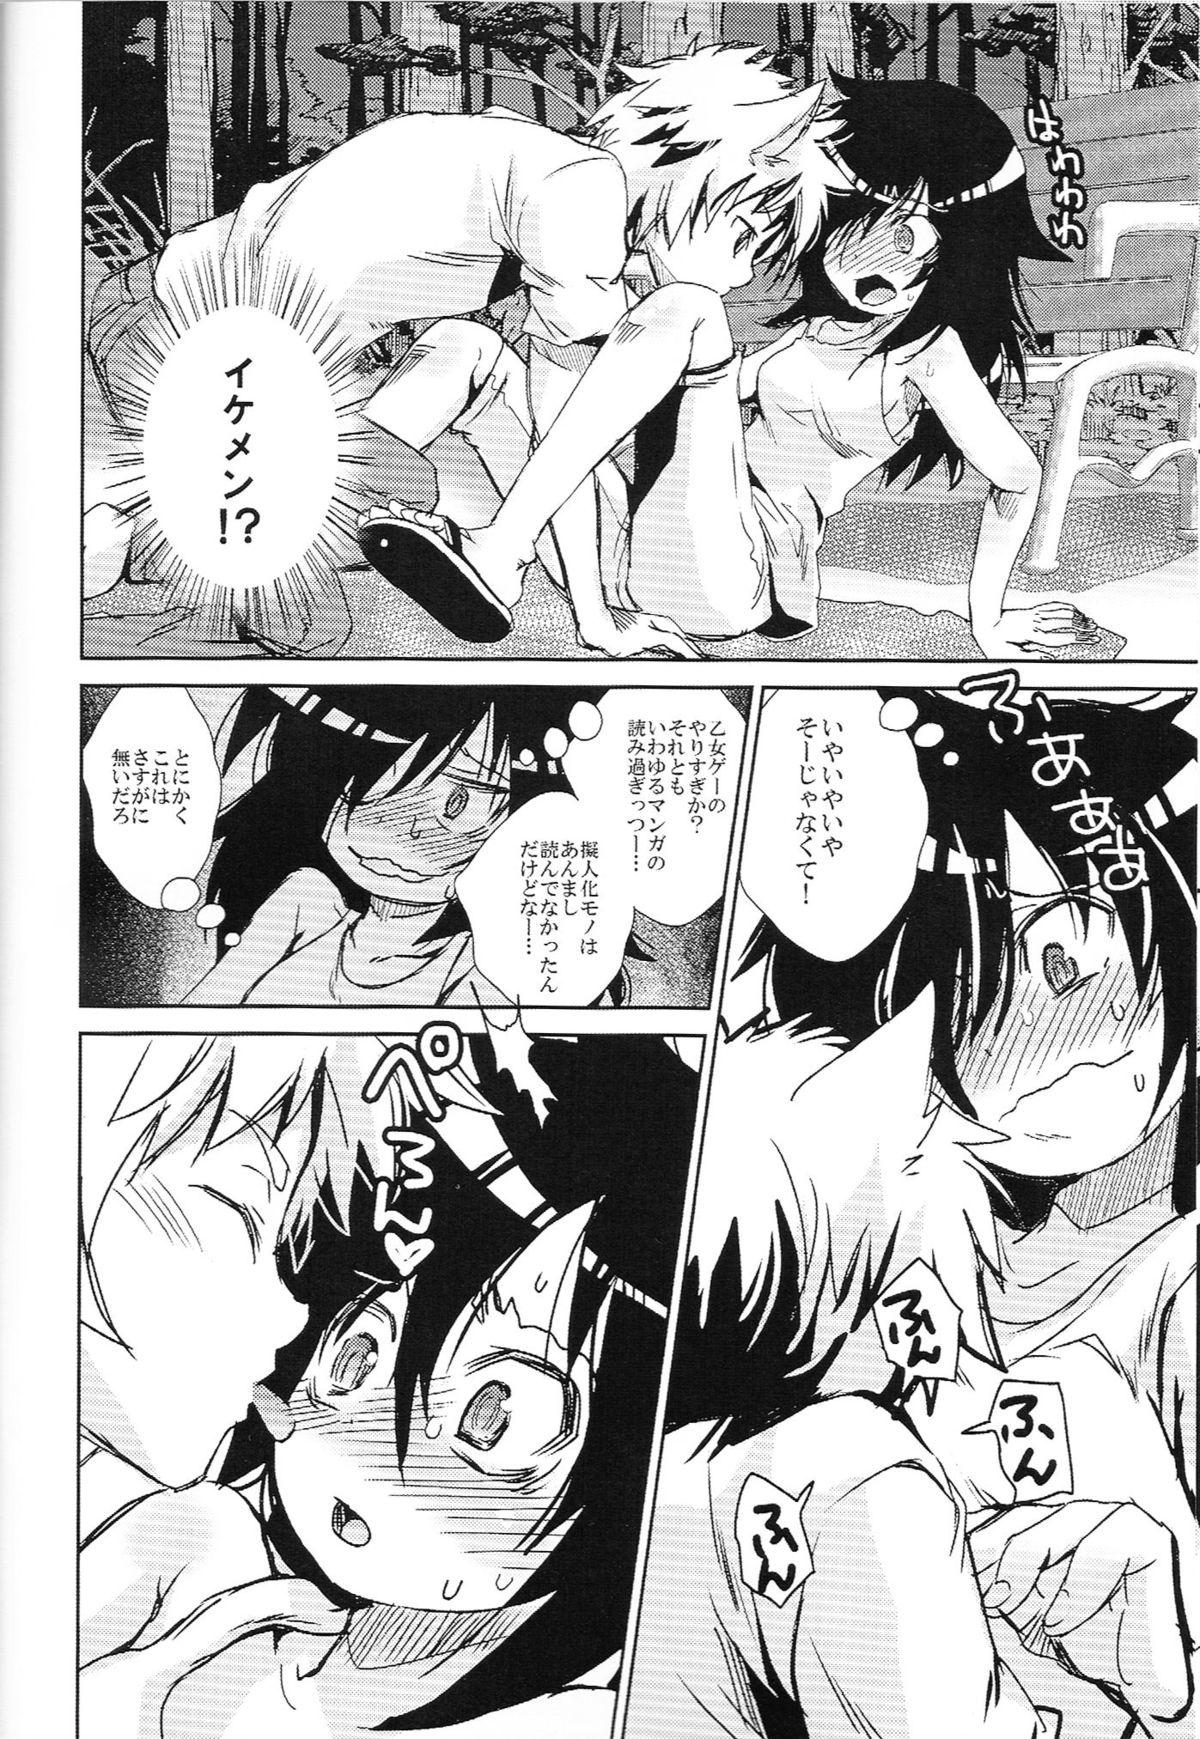 Ikillitts Watashi ga Moteru noha Neko ni dake! - Its not my fault that im not popular Machine - Page 5